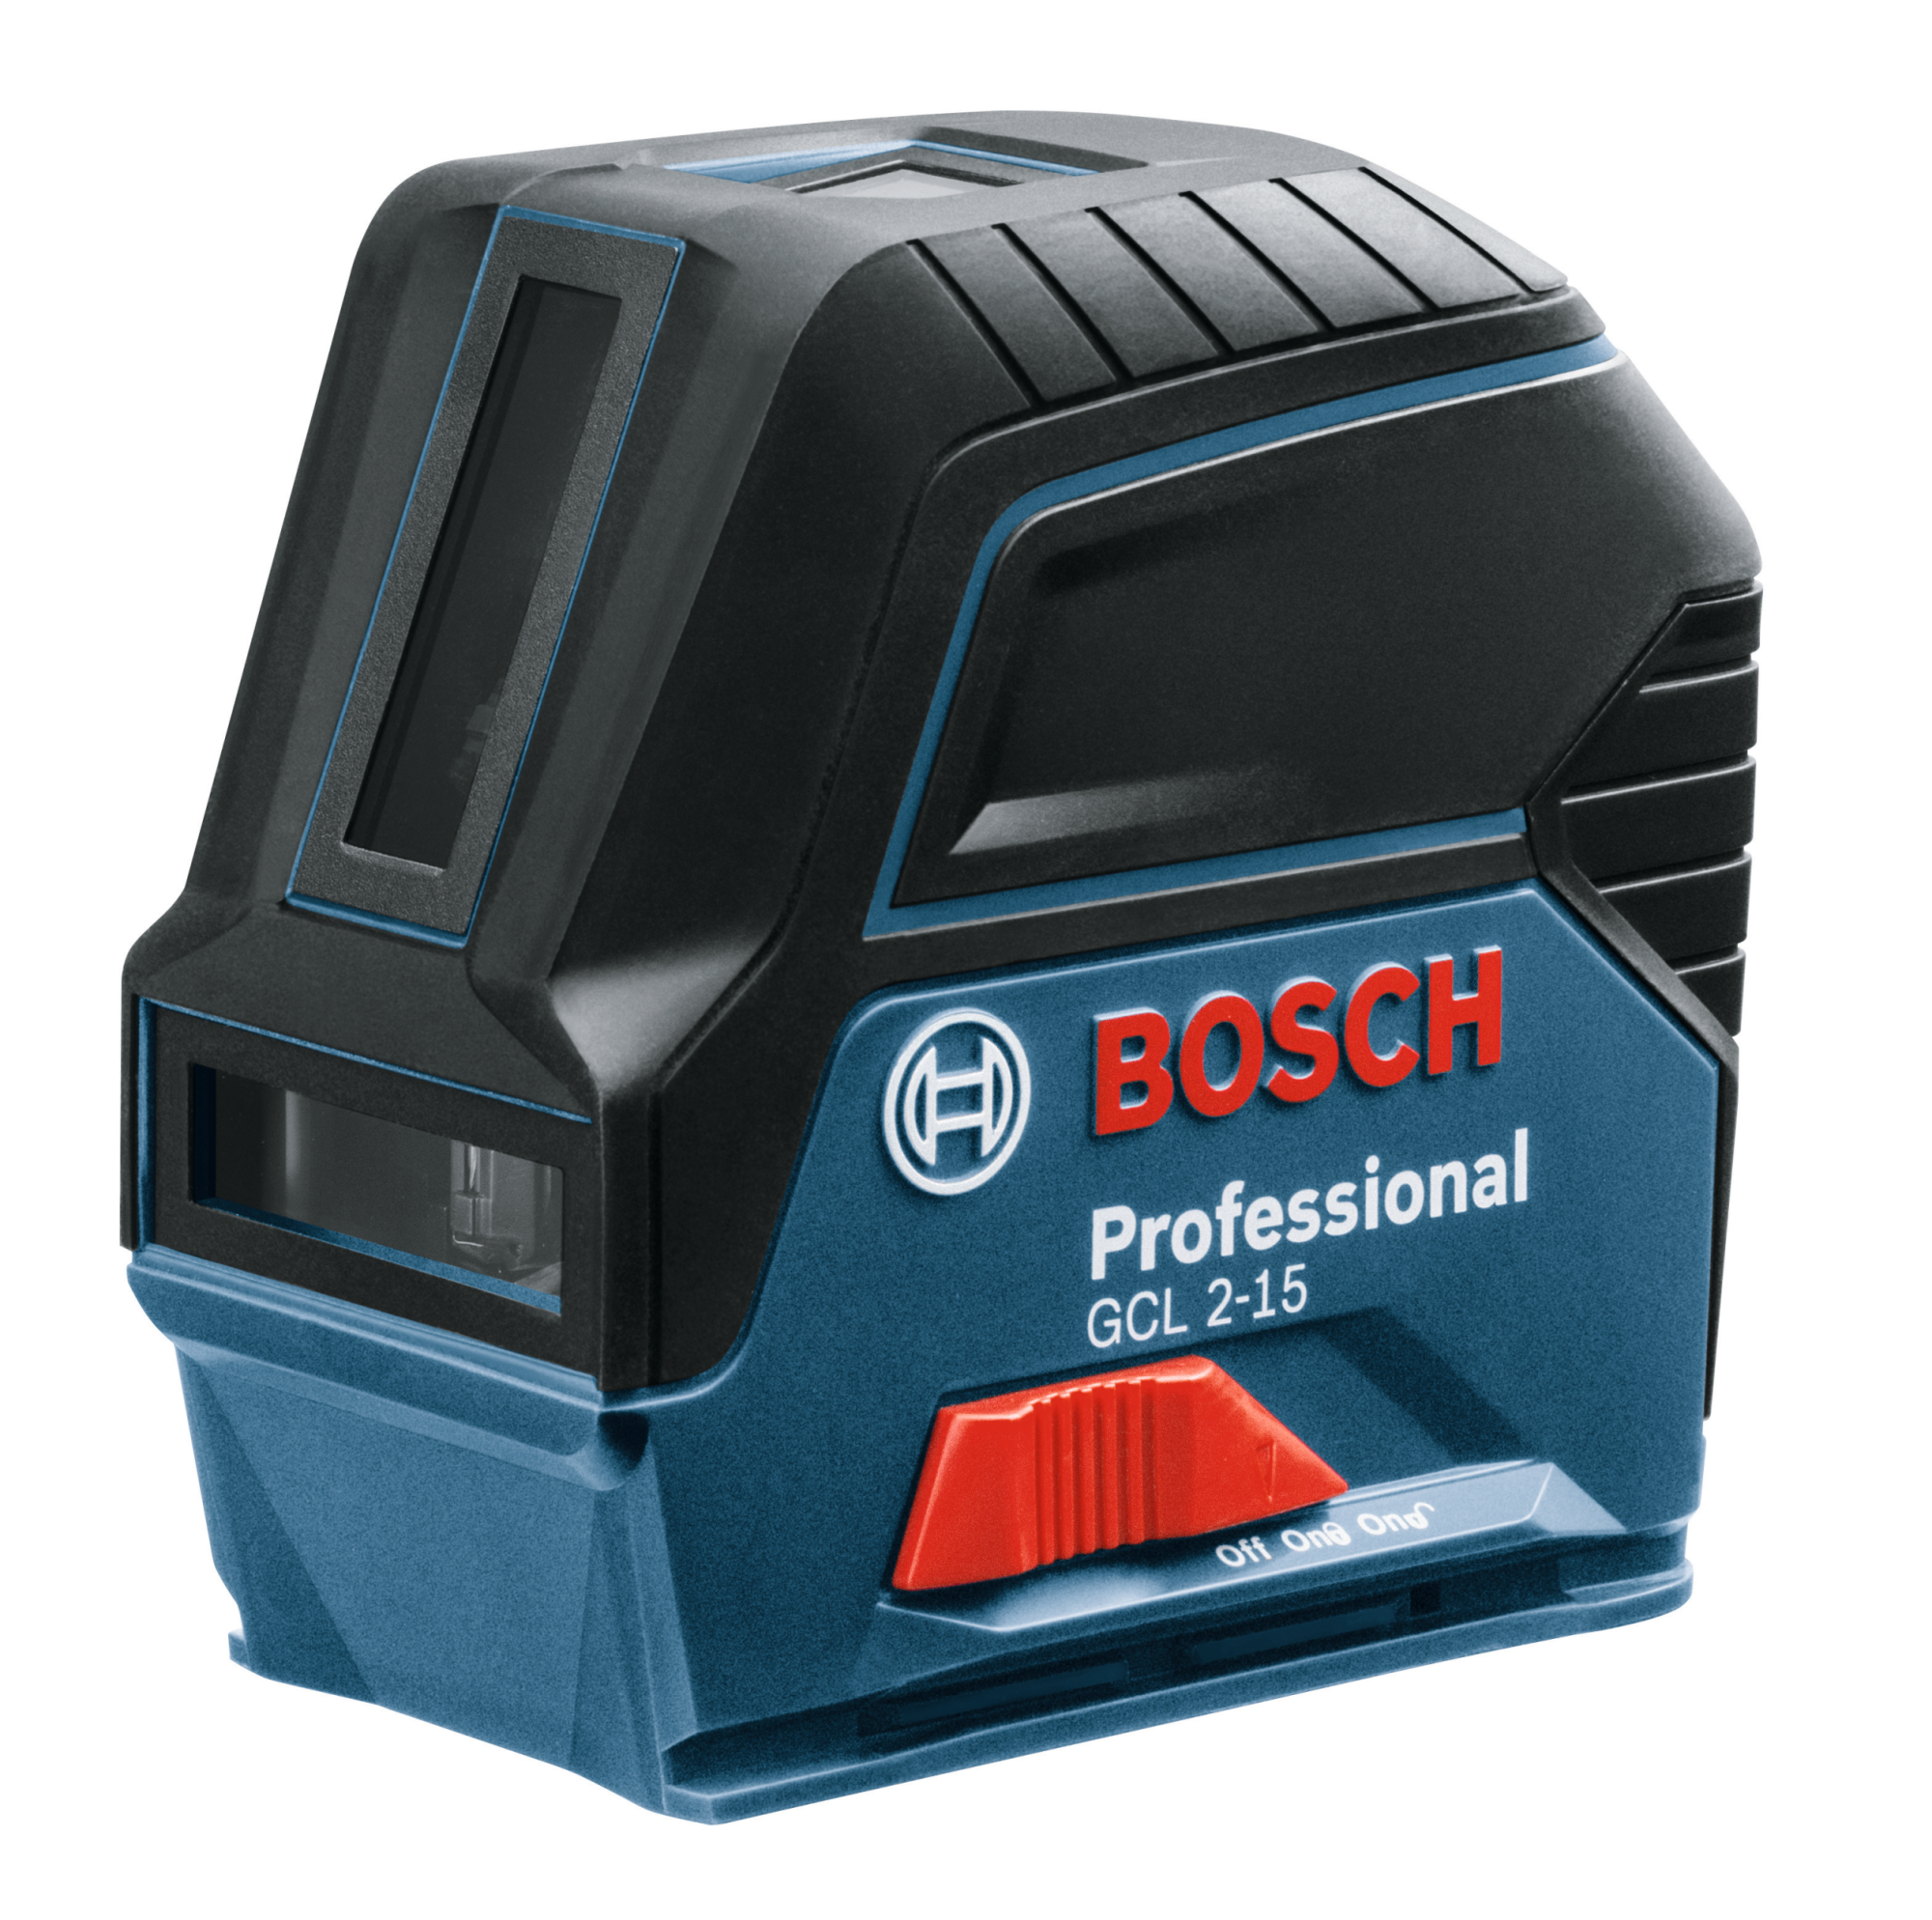 Nivel láser bosch professional gcl 2-15 nivel de precisión de +/-0.3mm